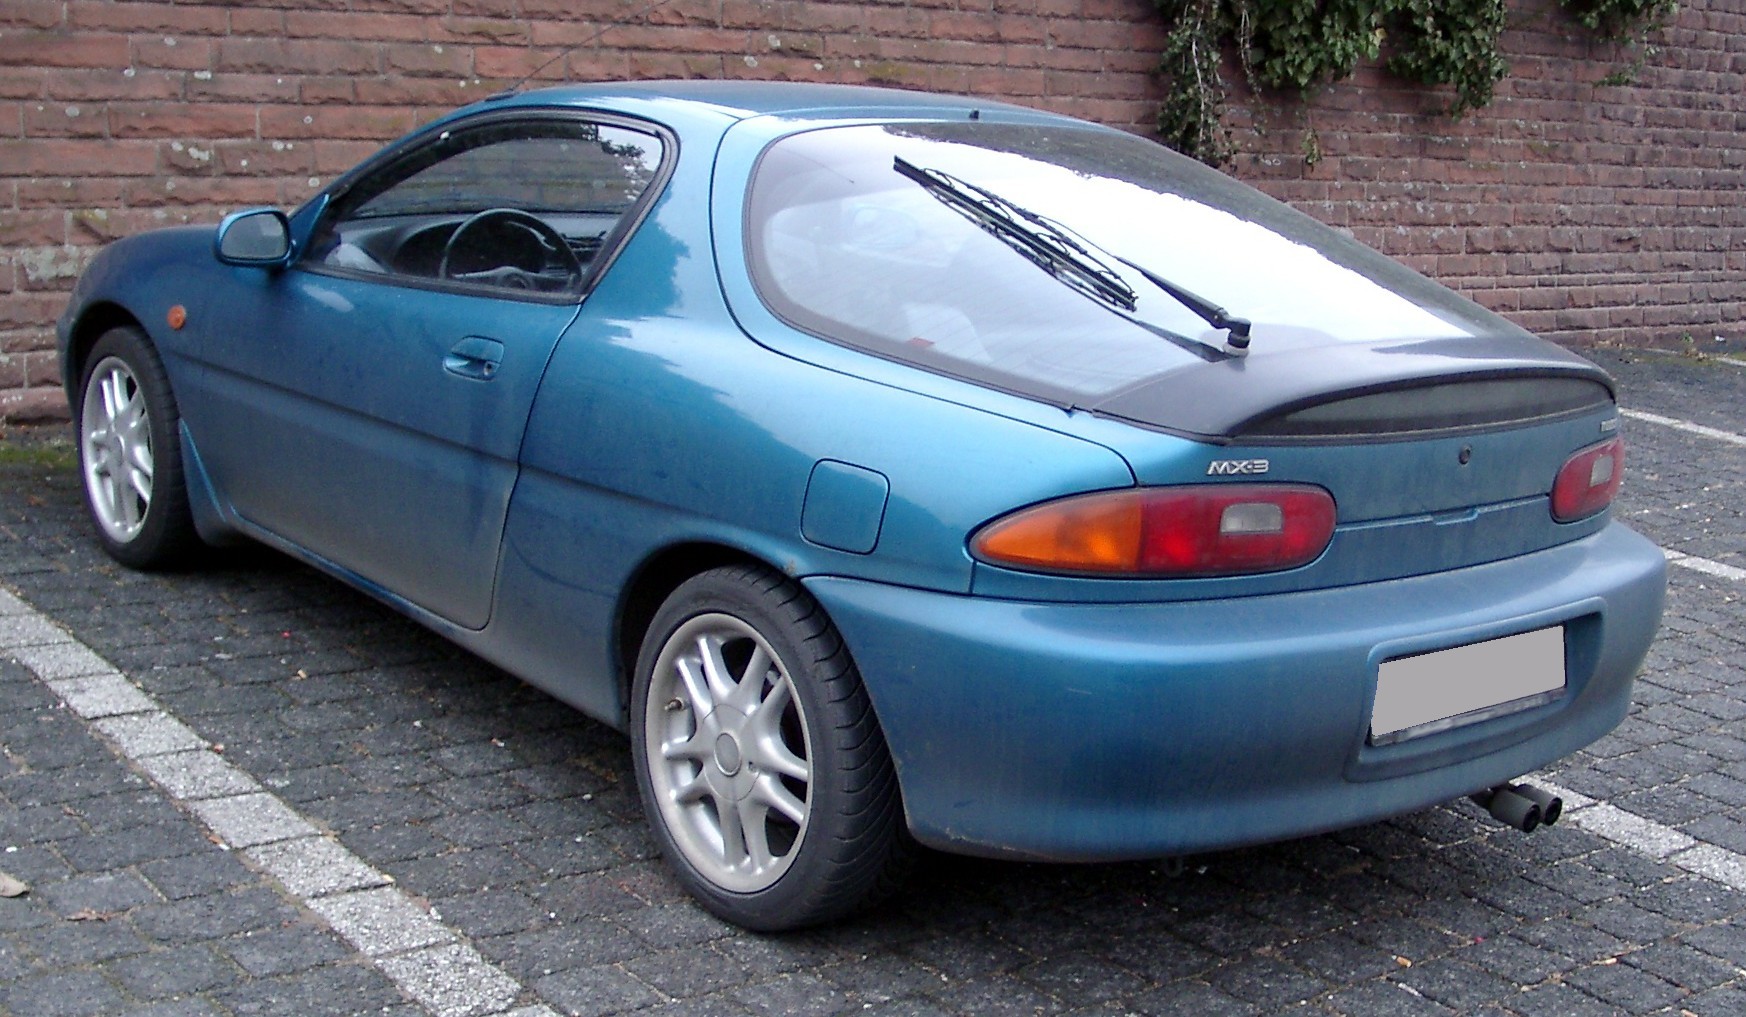 http://upload.wikimedia.org/wikipedia/commons/0/0a/Mazda_MX-3_rear_20080103.jpg